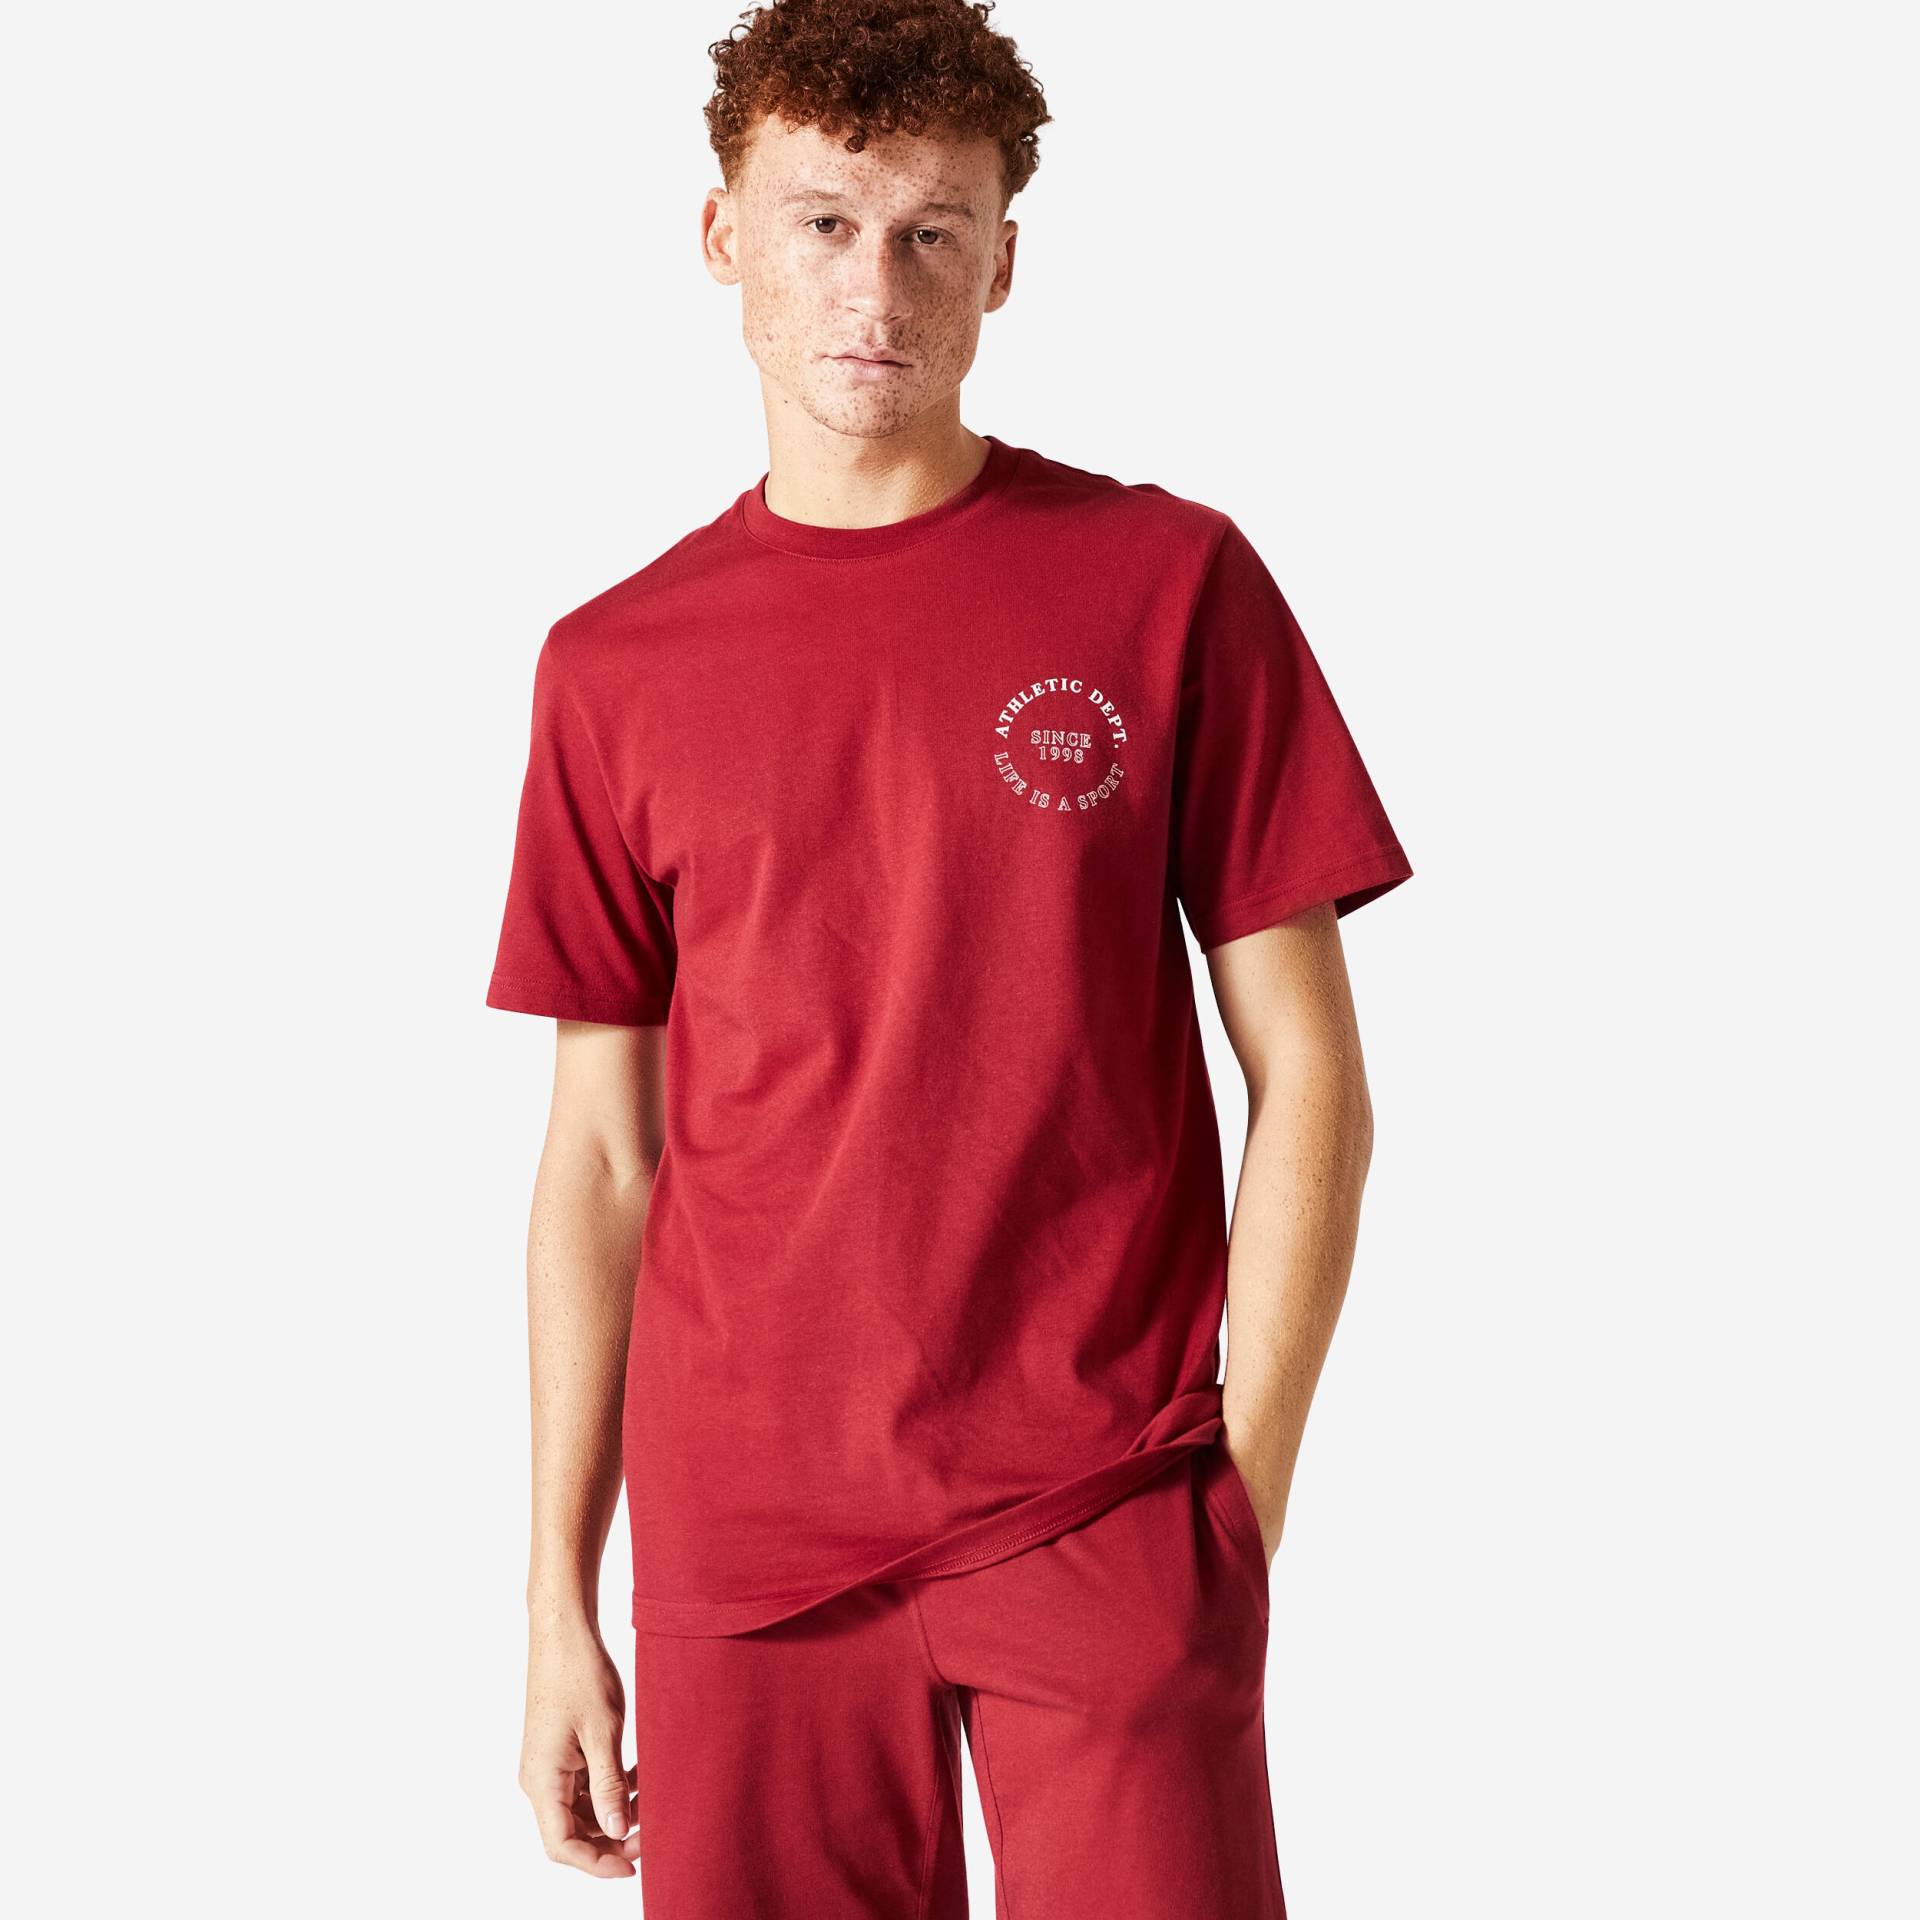 T-Shirt Herren - Essentials 500 bedruckt bordeauxrot von Domyos